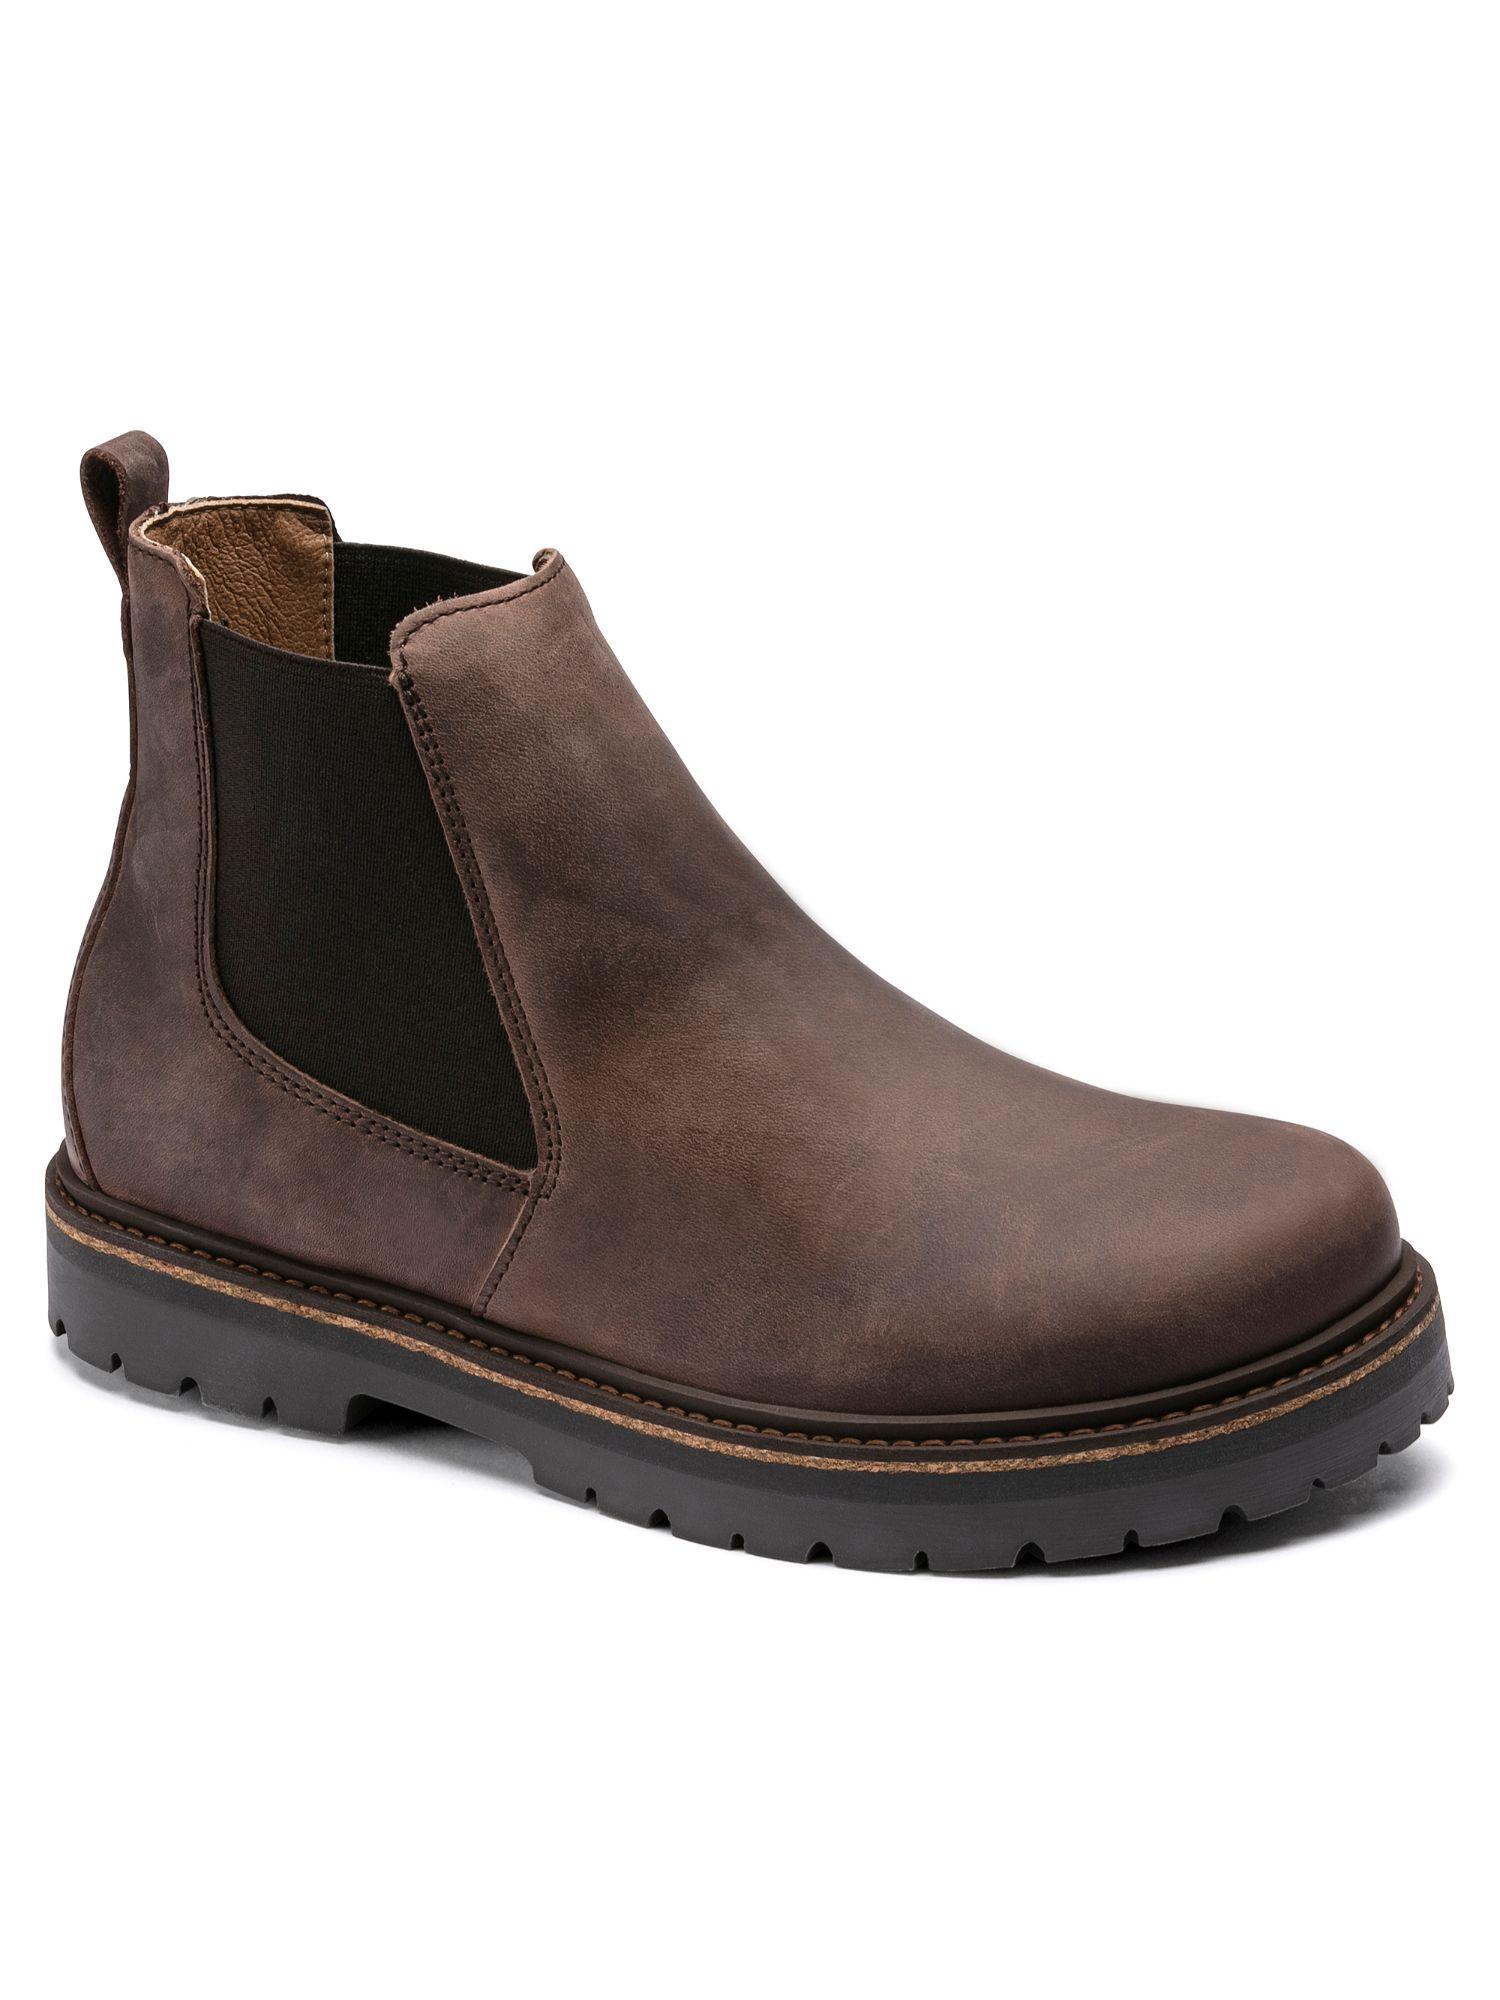 stalon nubuck leather brown flat boots